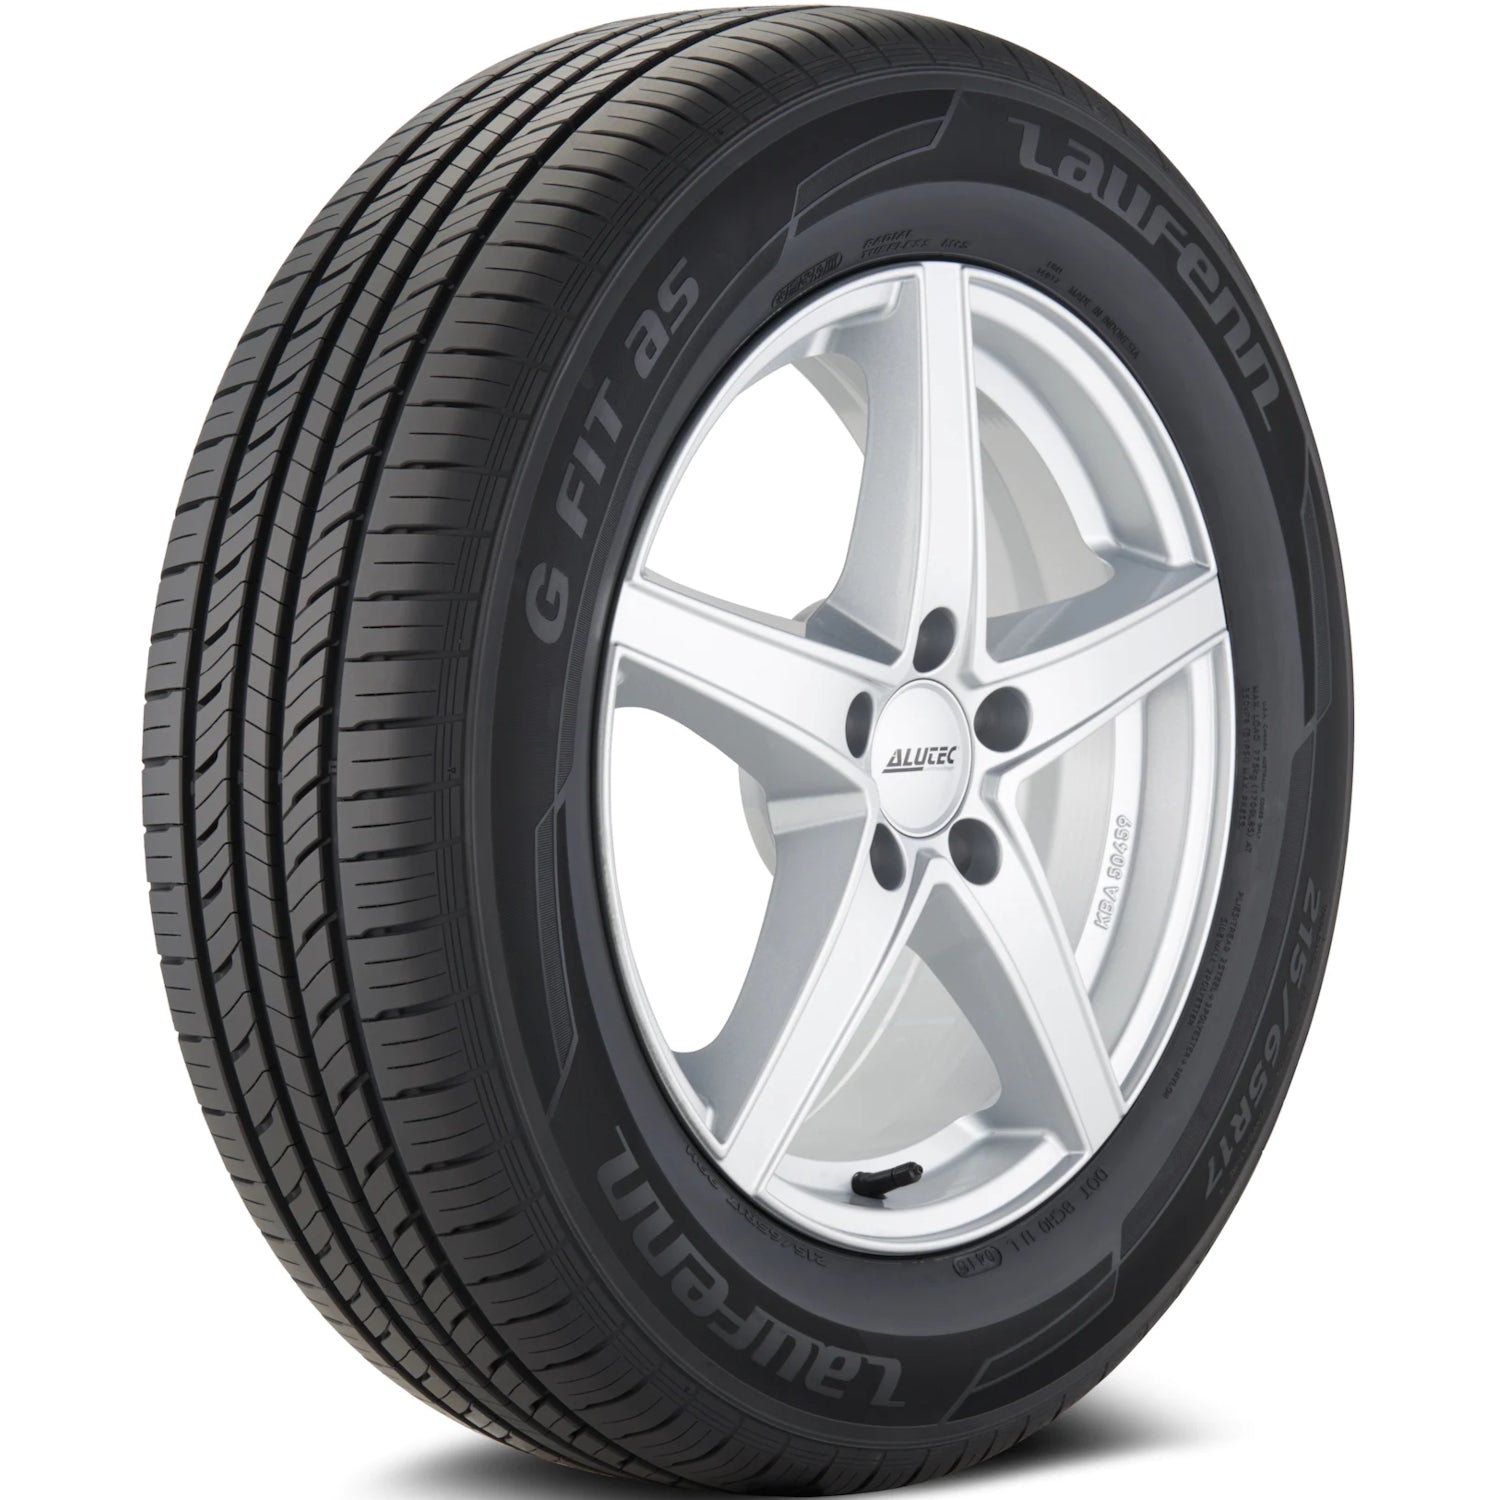 LAUFENN G FIT AS 205/60R15 (24.7X8.1R 15) Tires